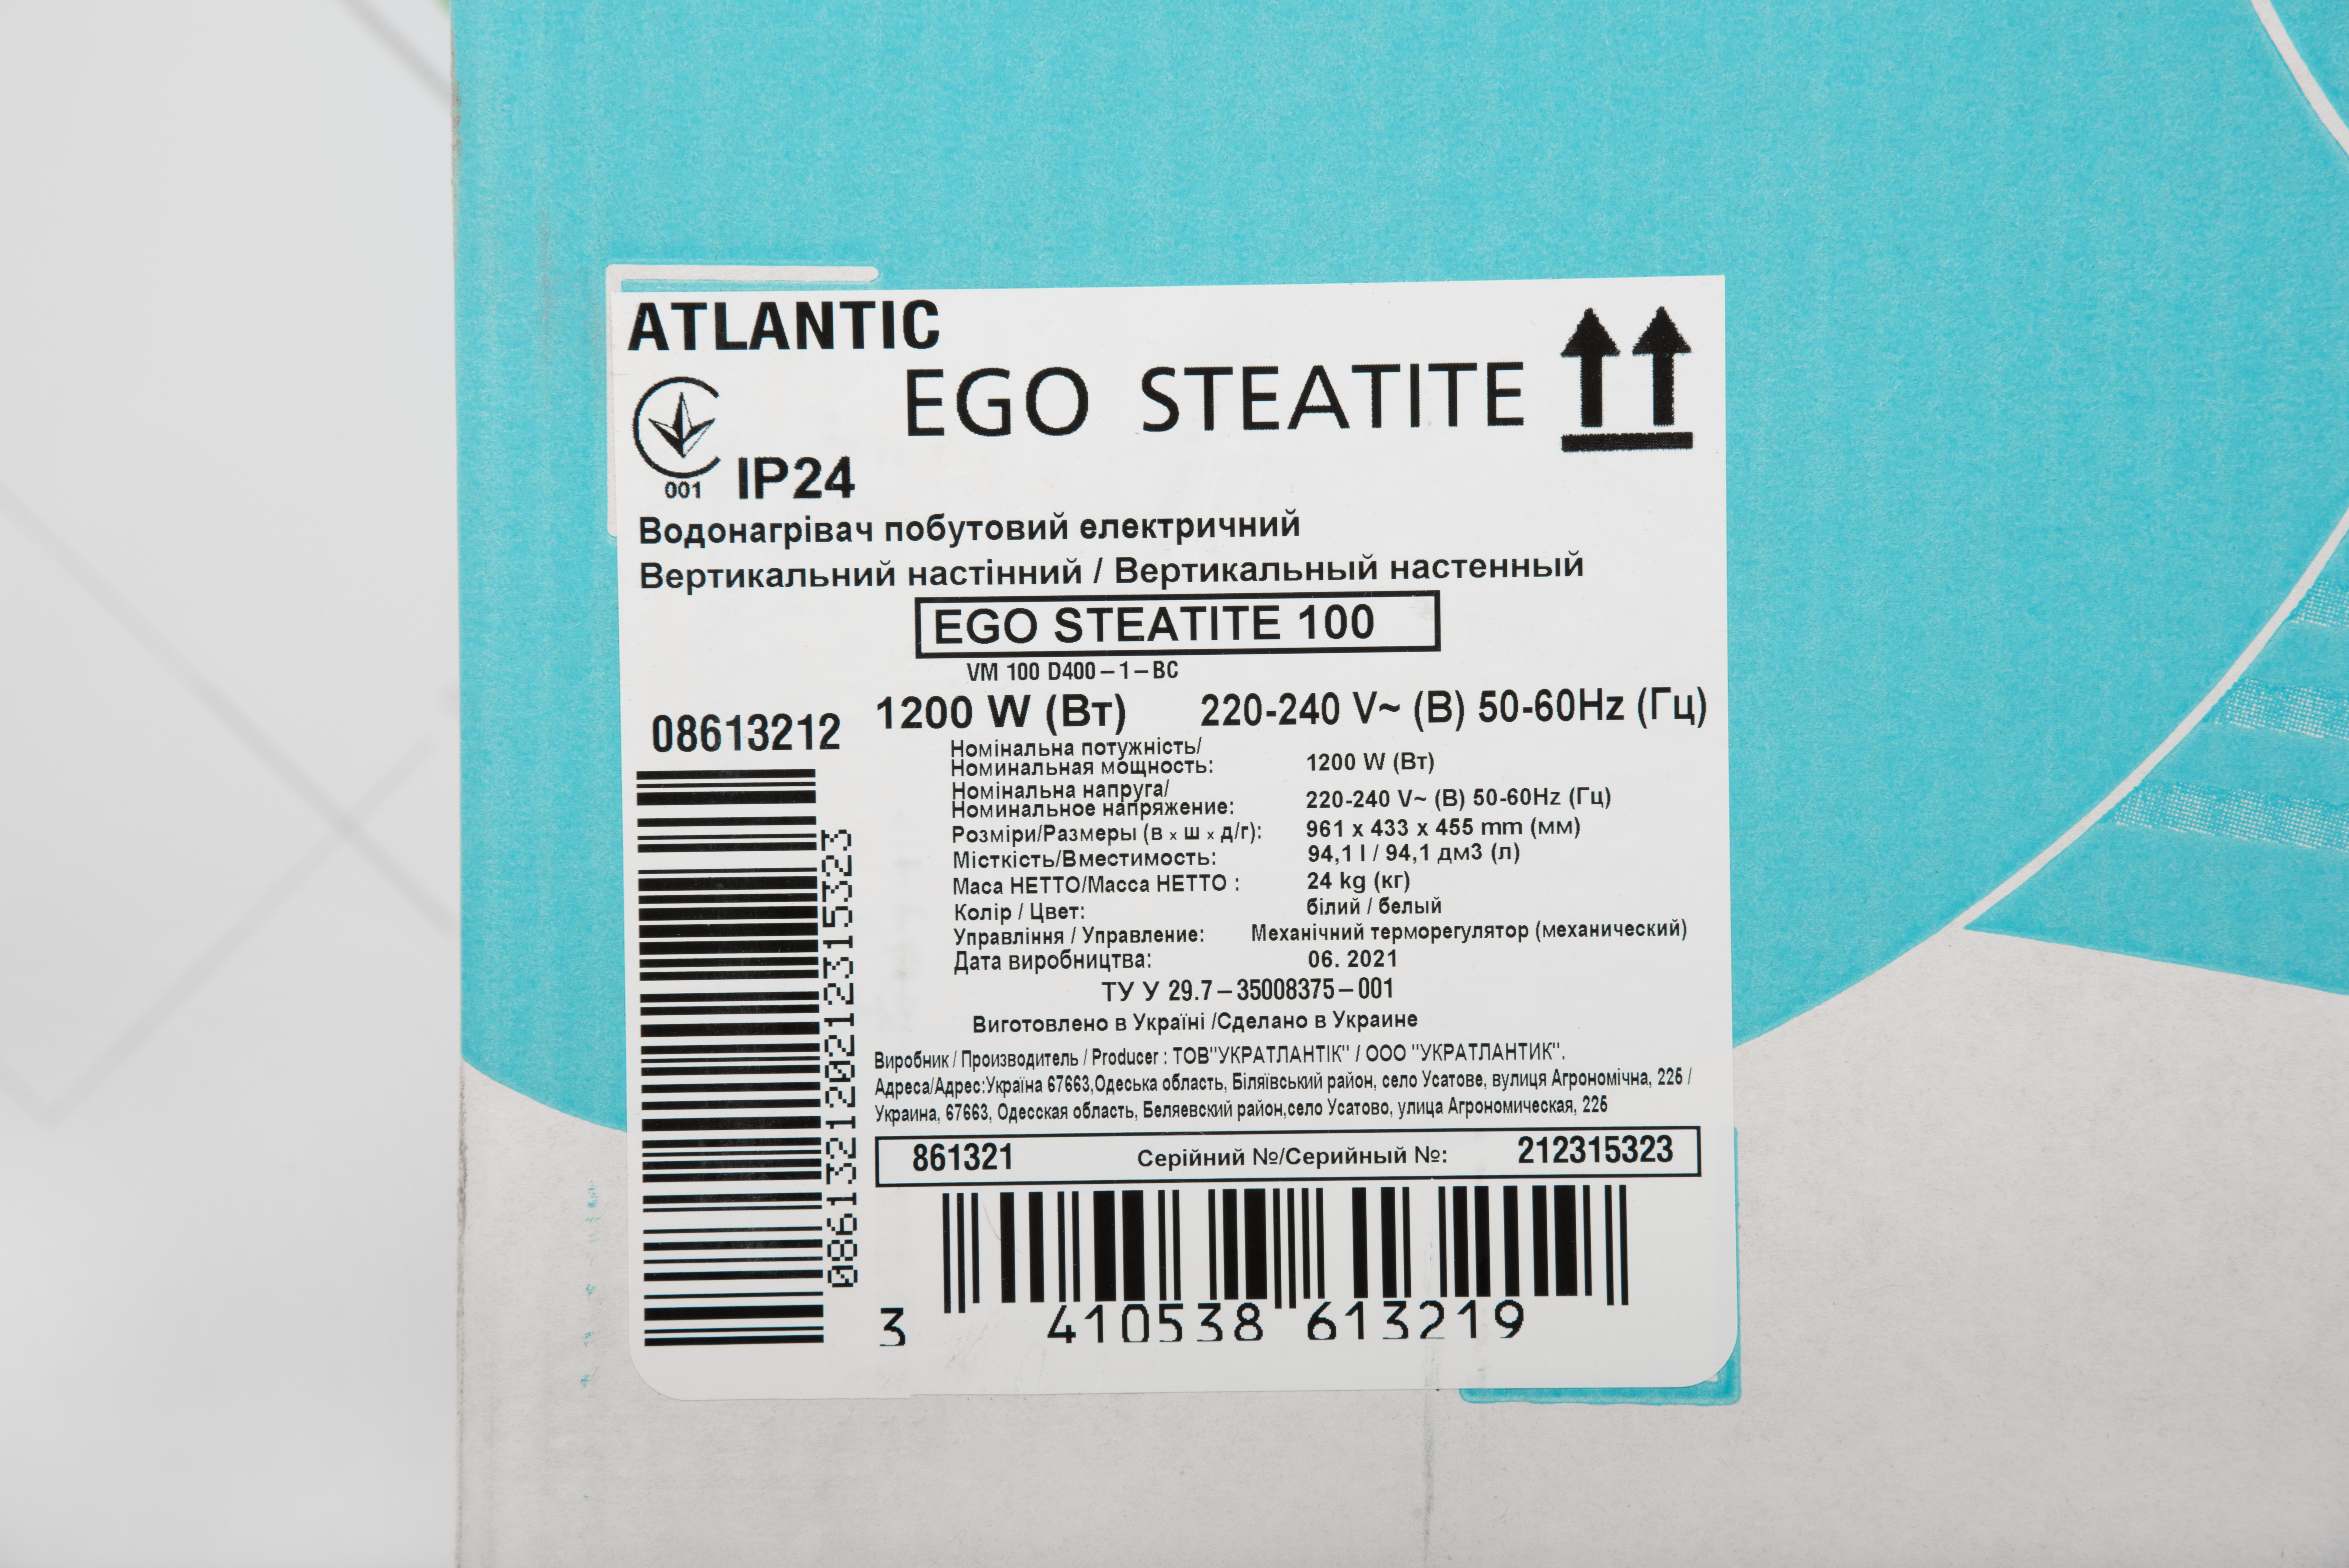 Atlantic Steatite Ego VM 100 D400-1-BC в магазине - фото 17